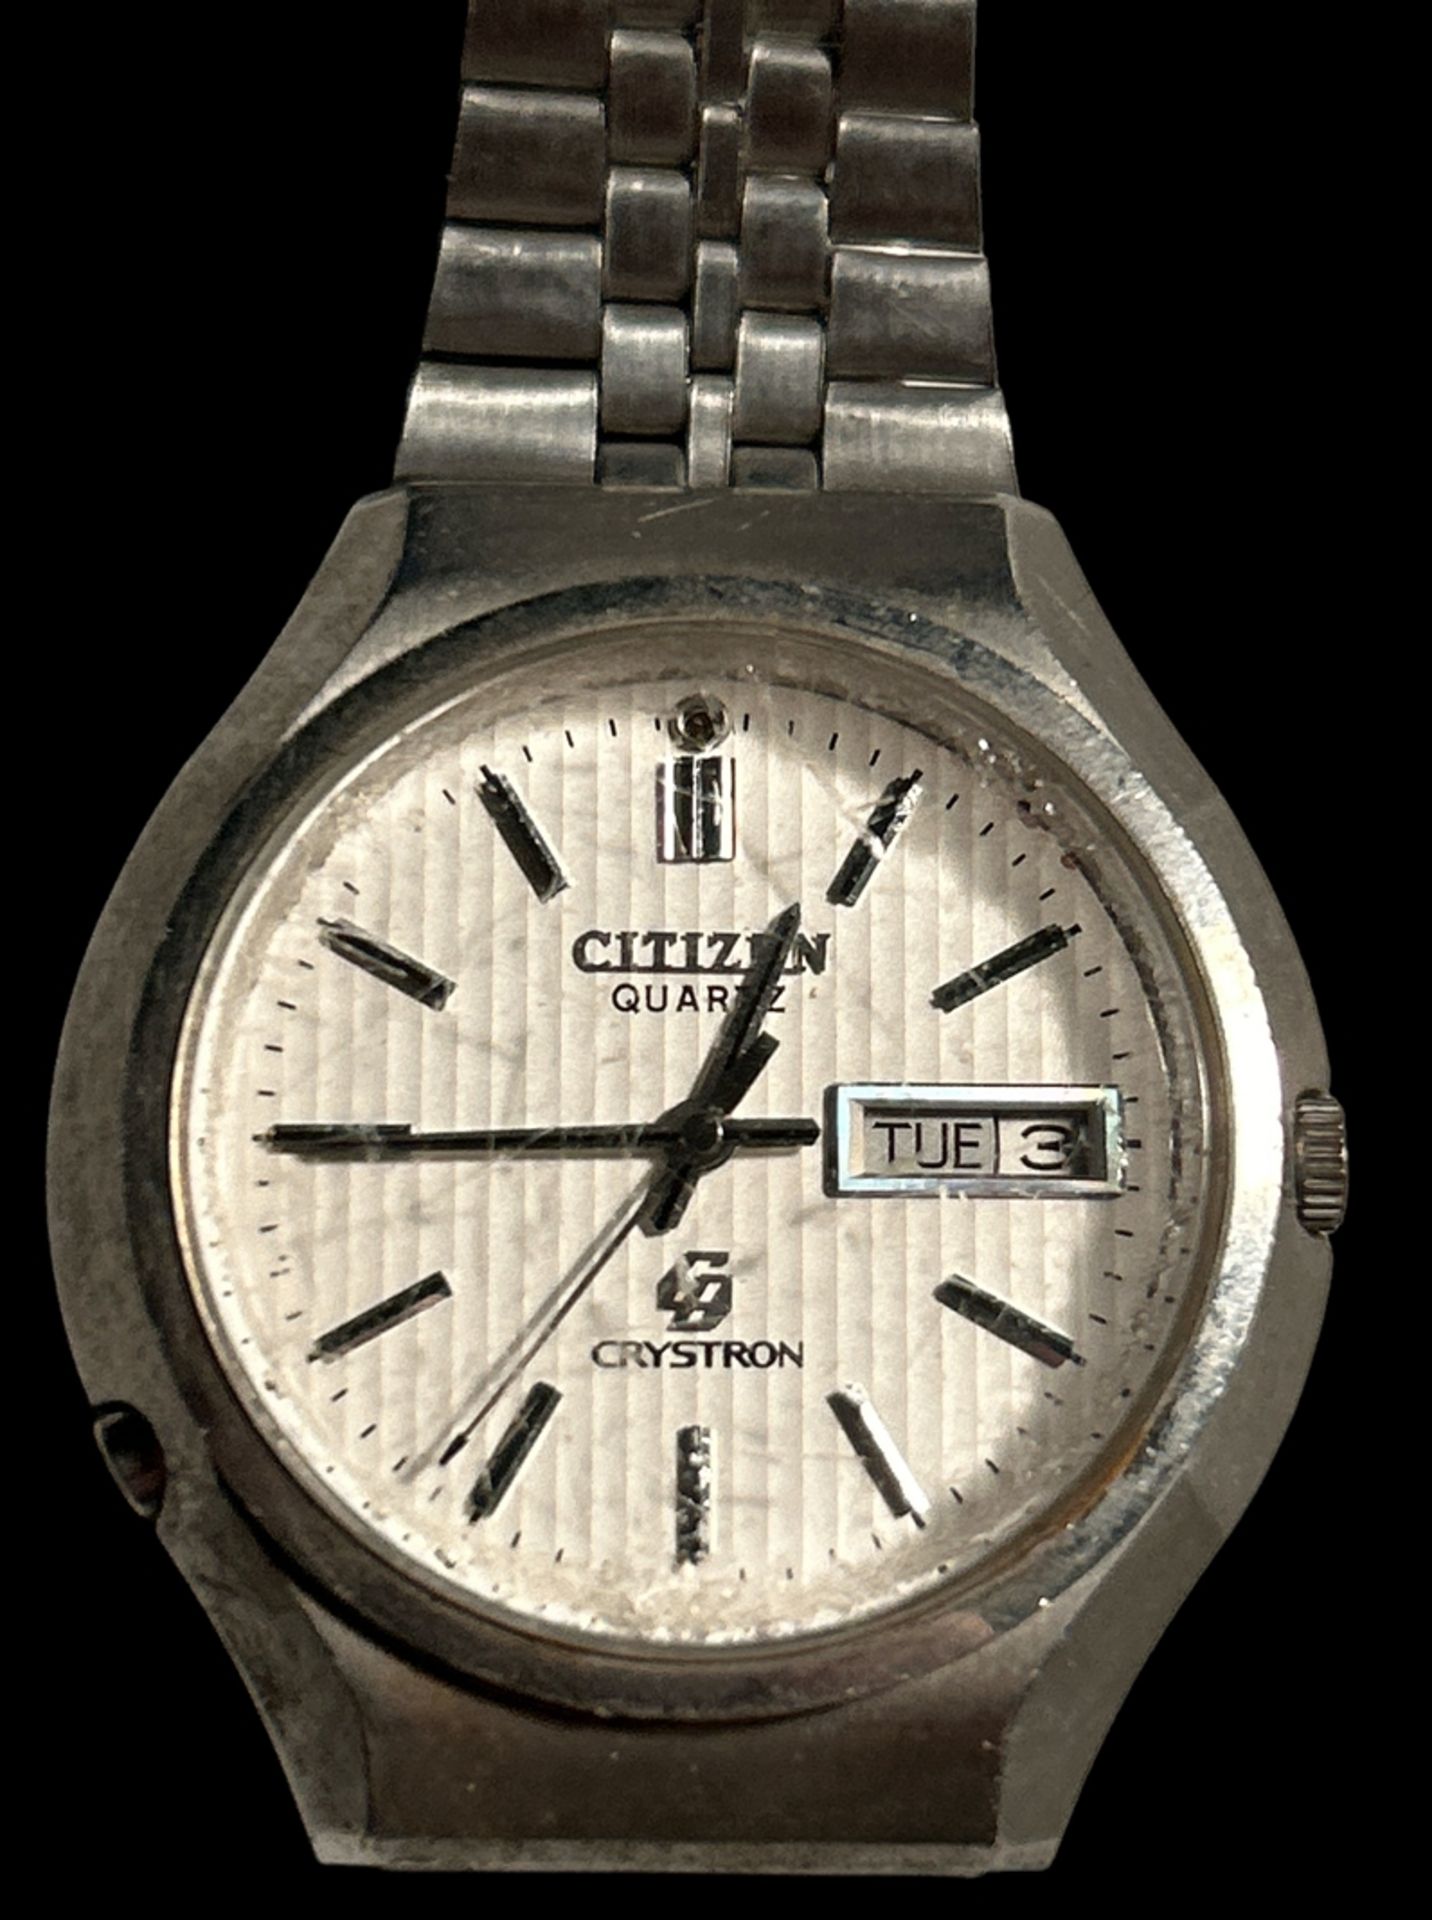 HAU "Citizen Crystron" frühe Quartz Armbanduhr, porig. Stahlband, Werk nicht überprüft